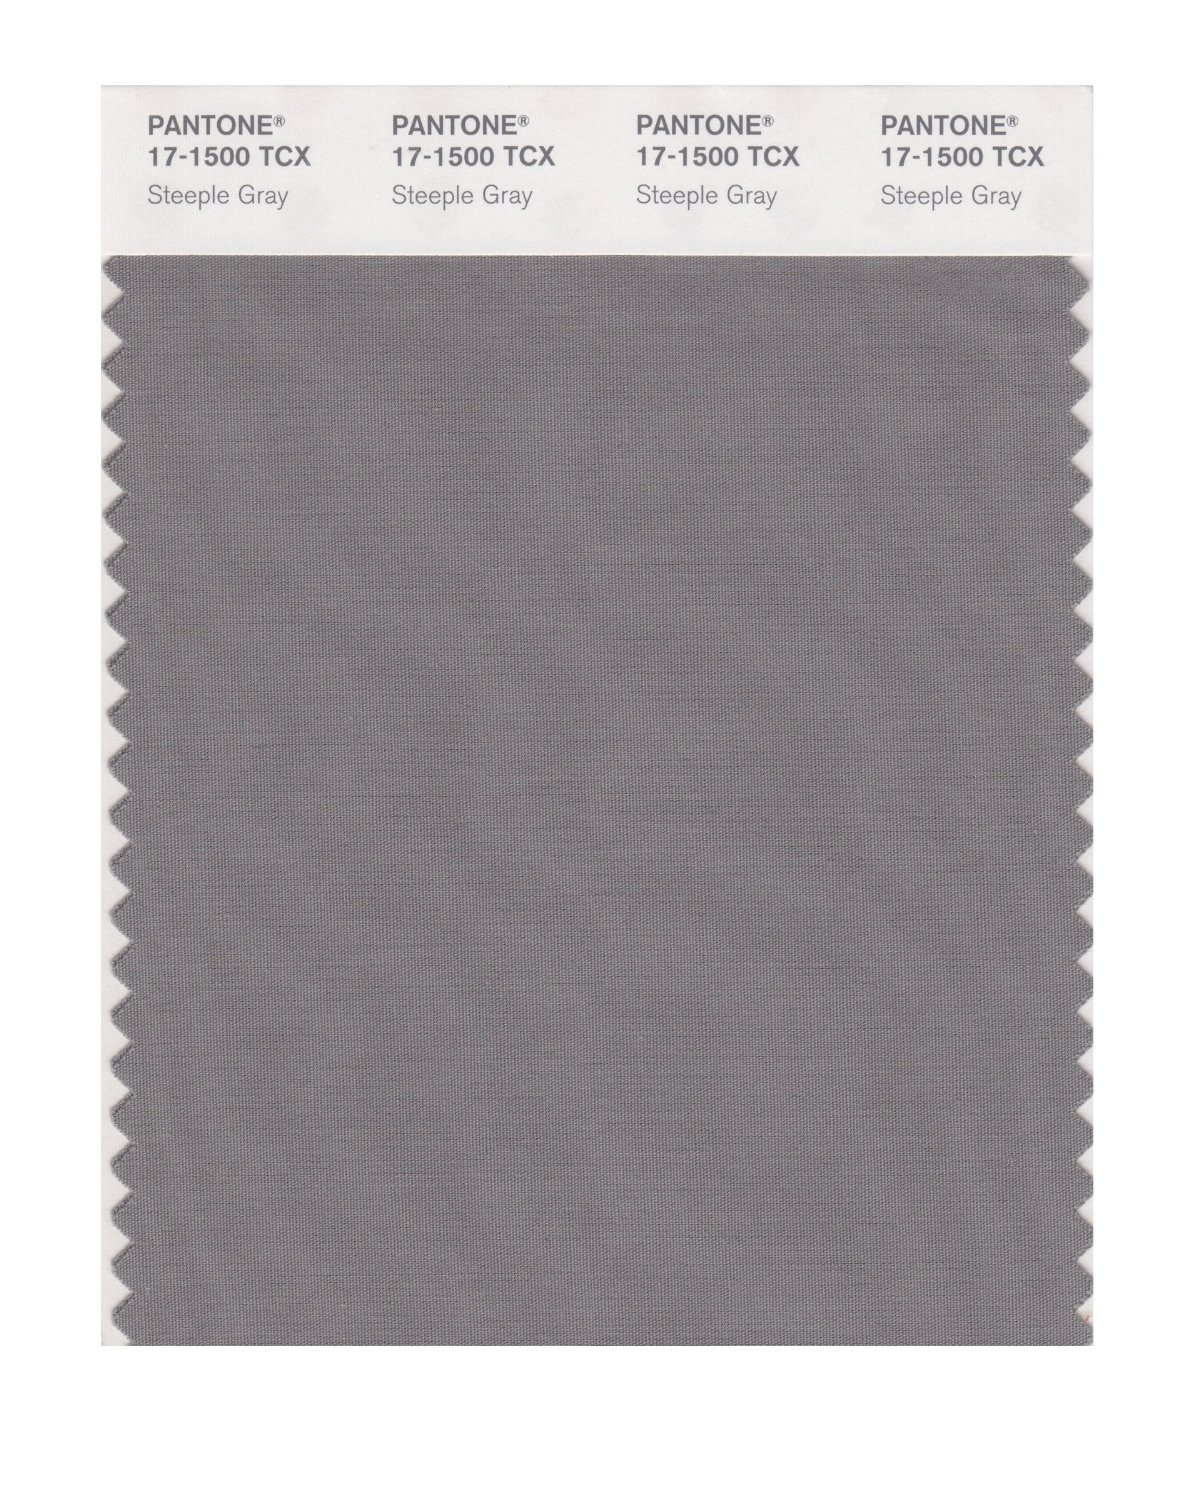 Pantone Cotton Swatch 17-1500 Steeple Gray